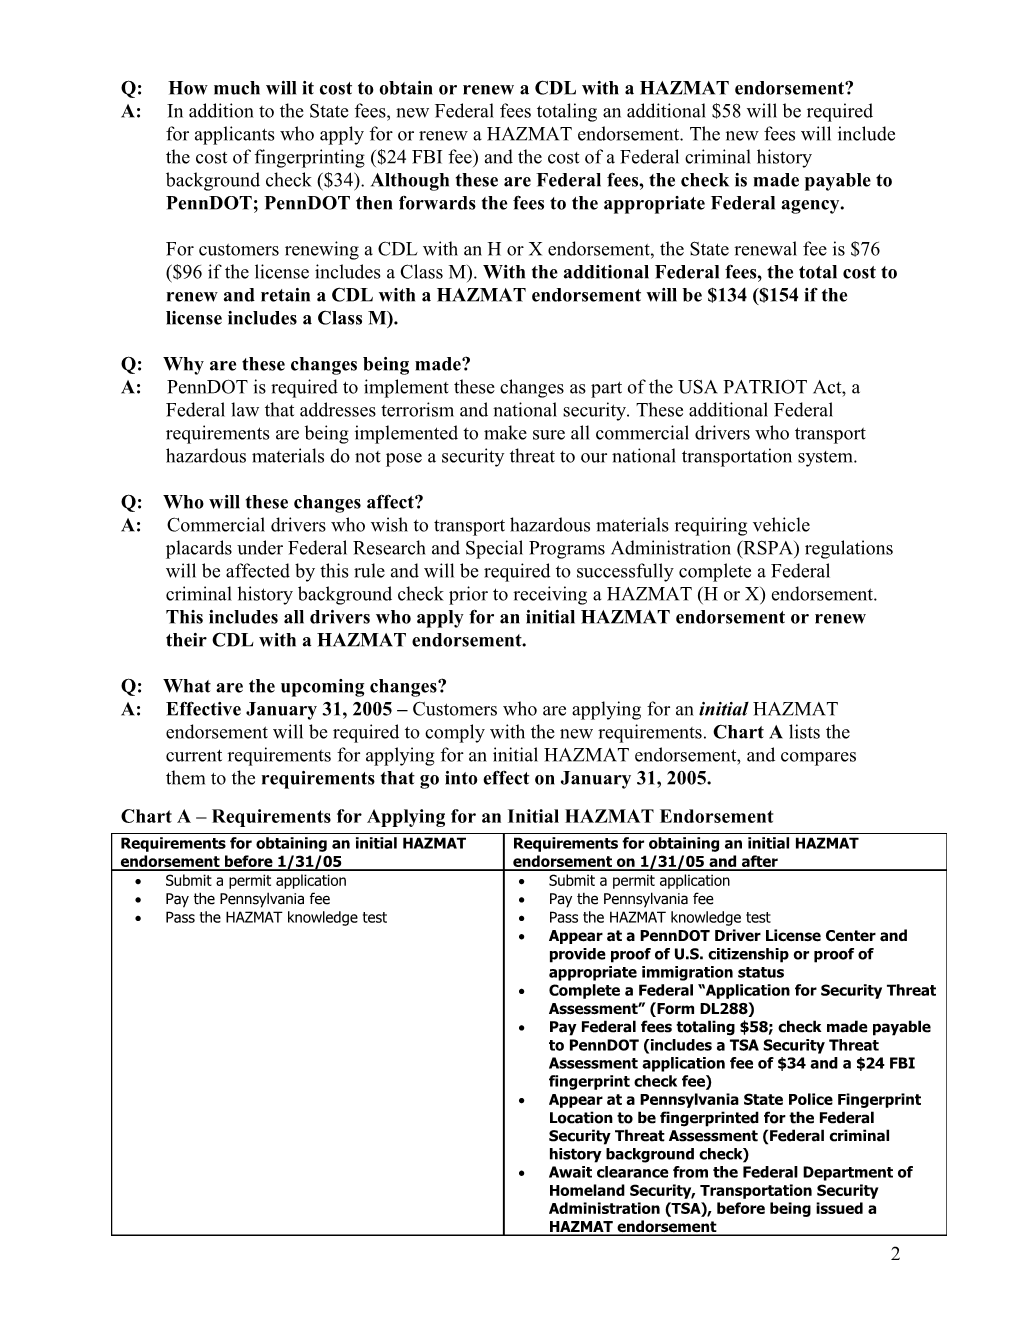 USA PATRIOT Act / New HAZMAT Commercial Driver Requirements